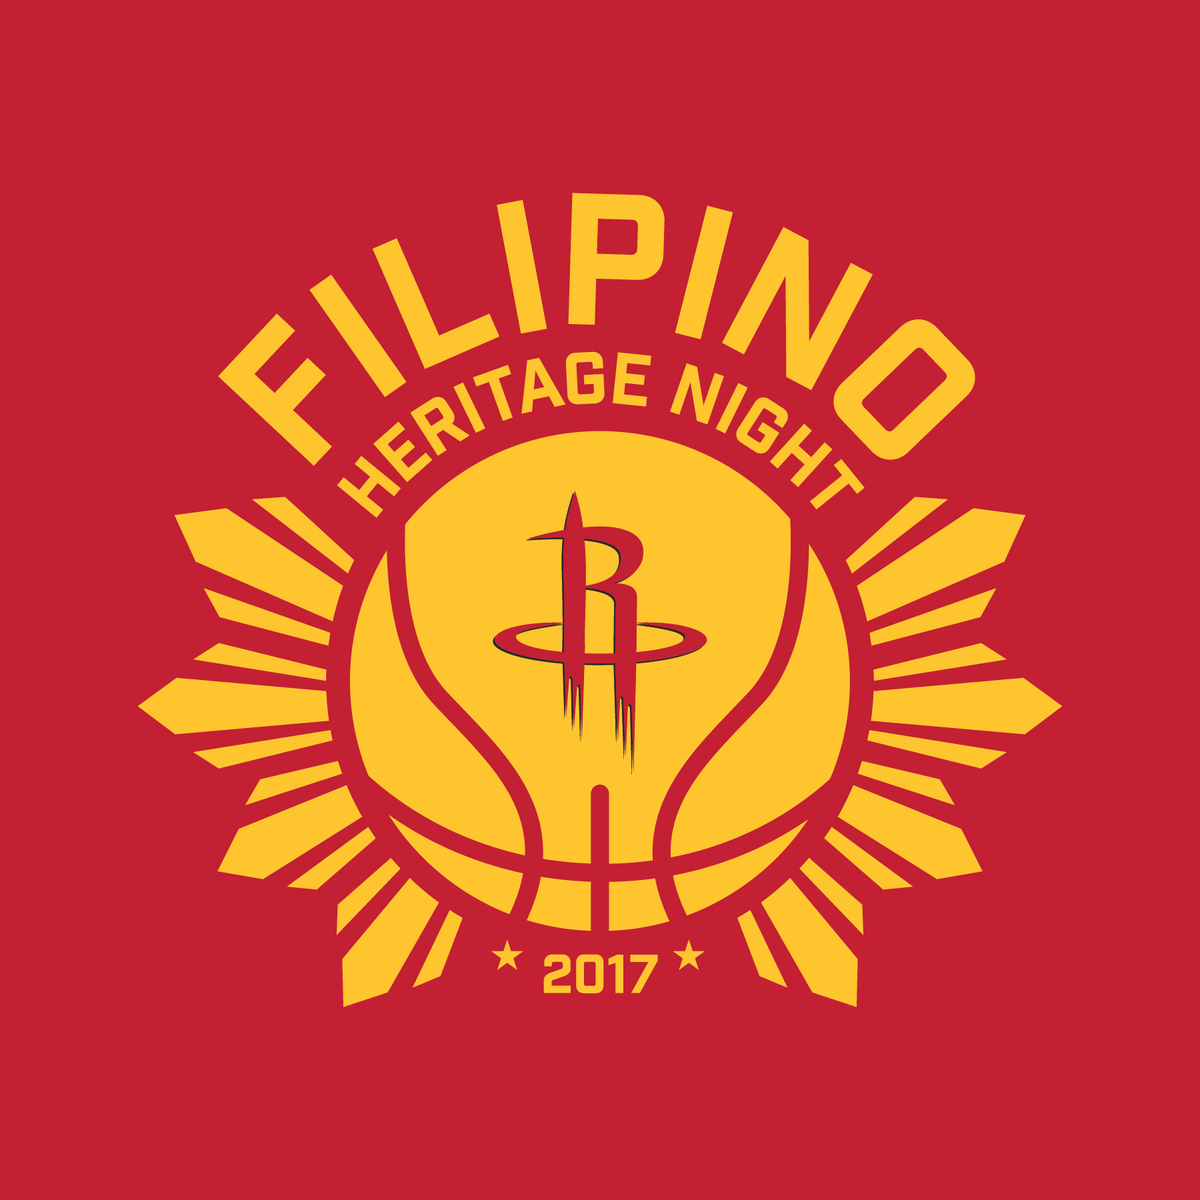 Houston Rockets Filipino Heritage Night by Sandra Lara on Dribbble